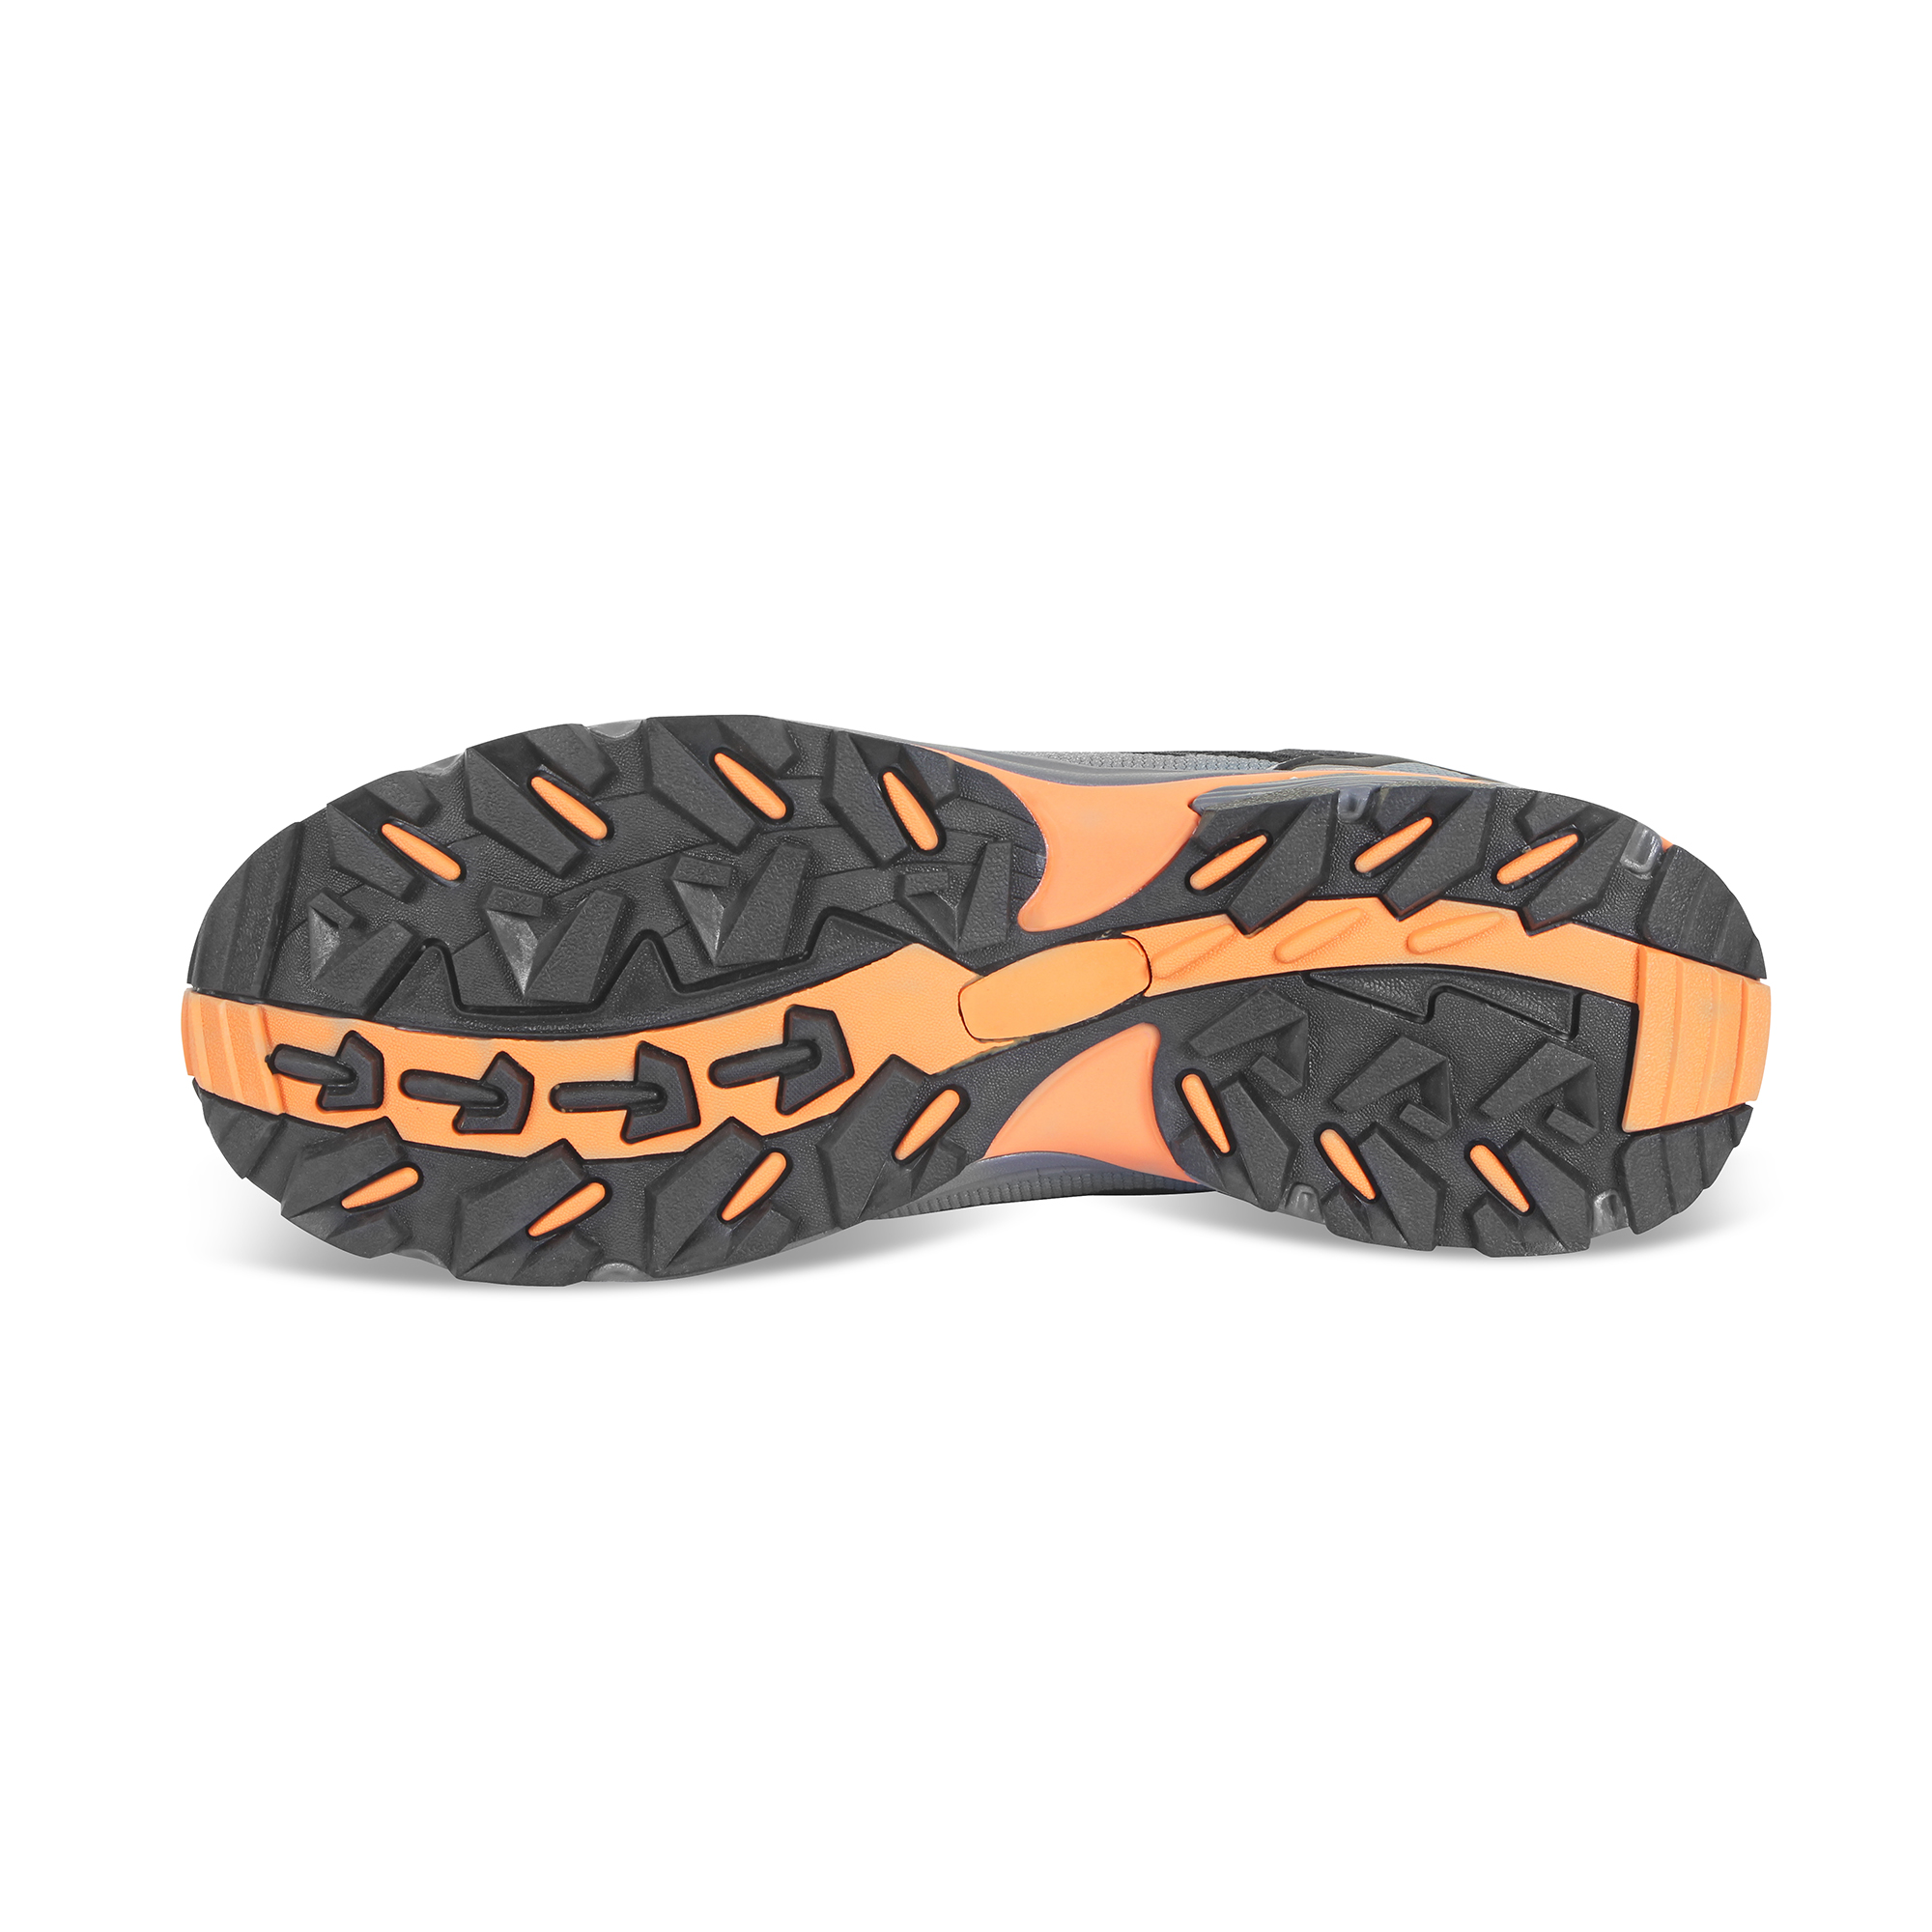 Beeswift Hiker S3 Composite Safety Boots Black/Orange/Grey Size 10.5 ...